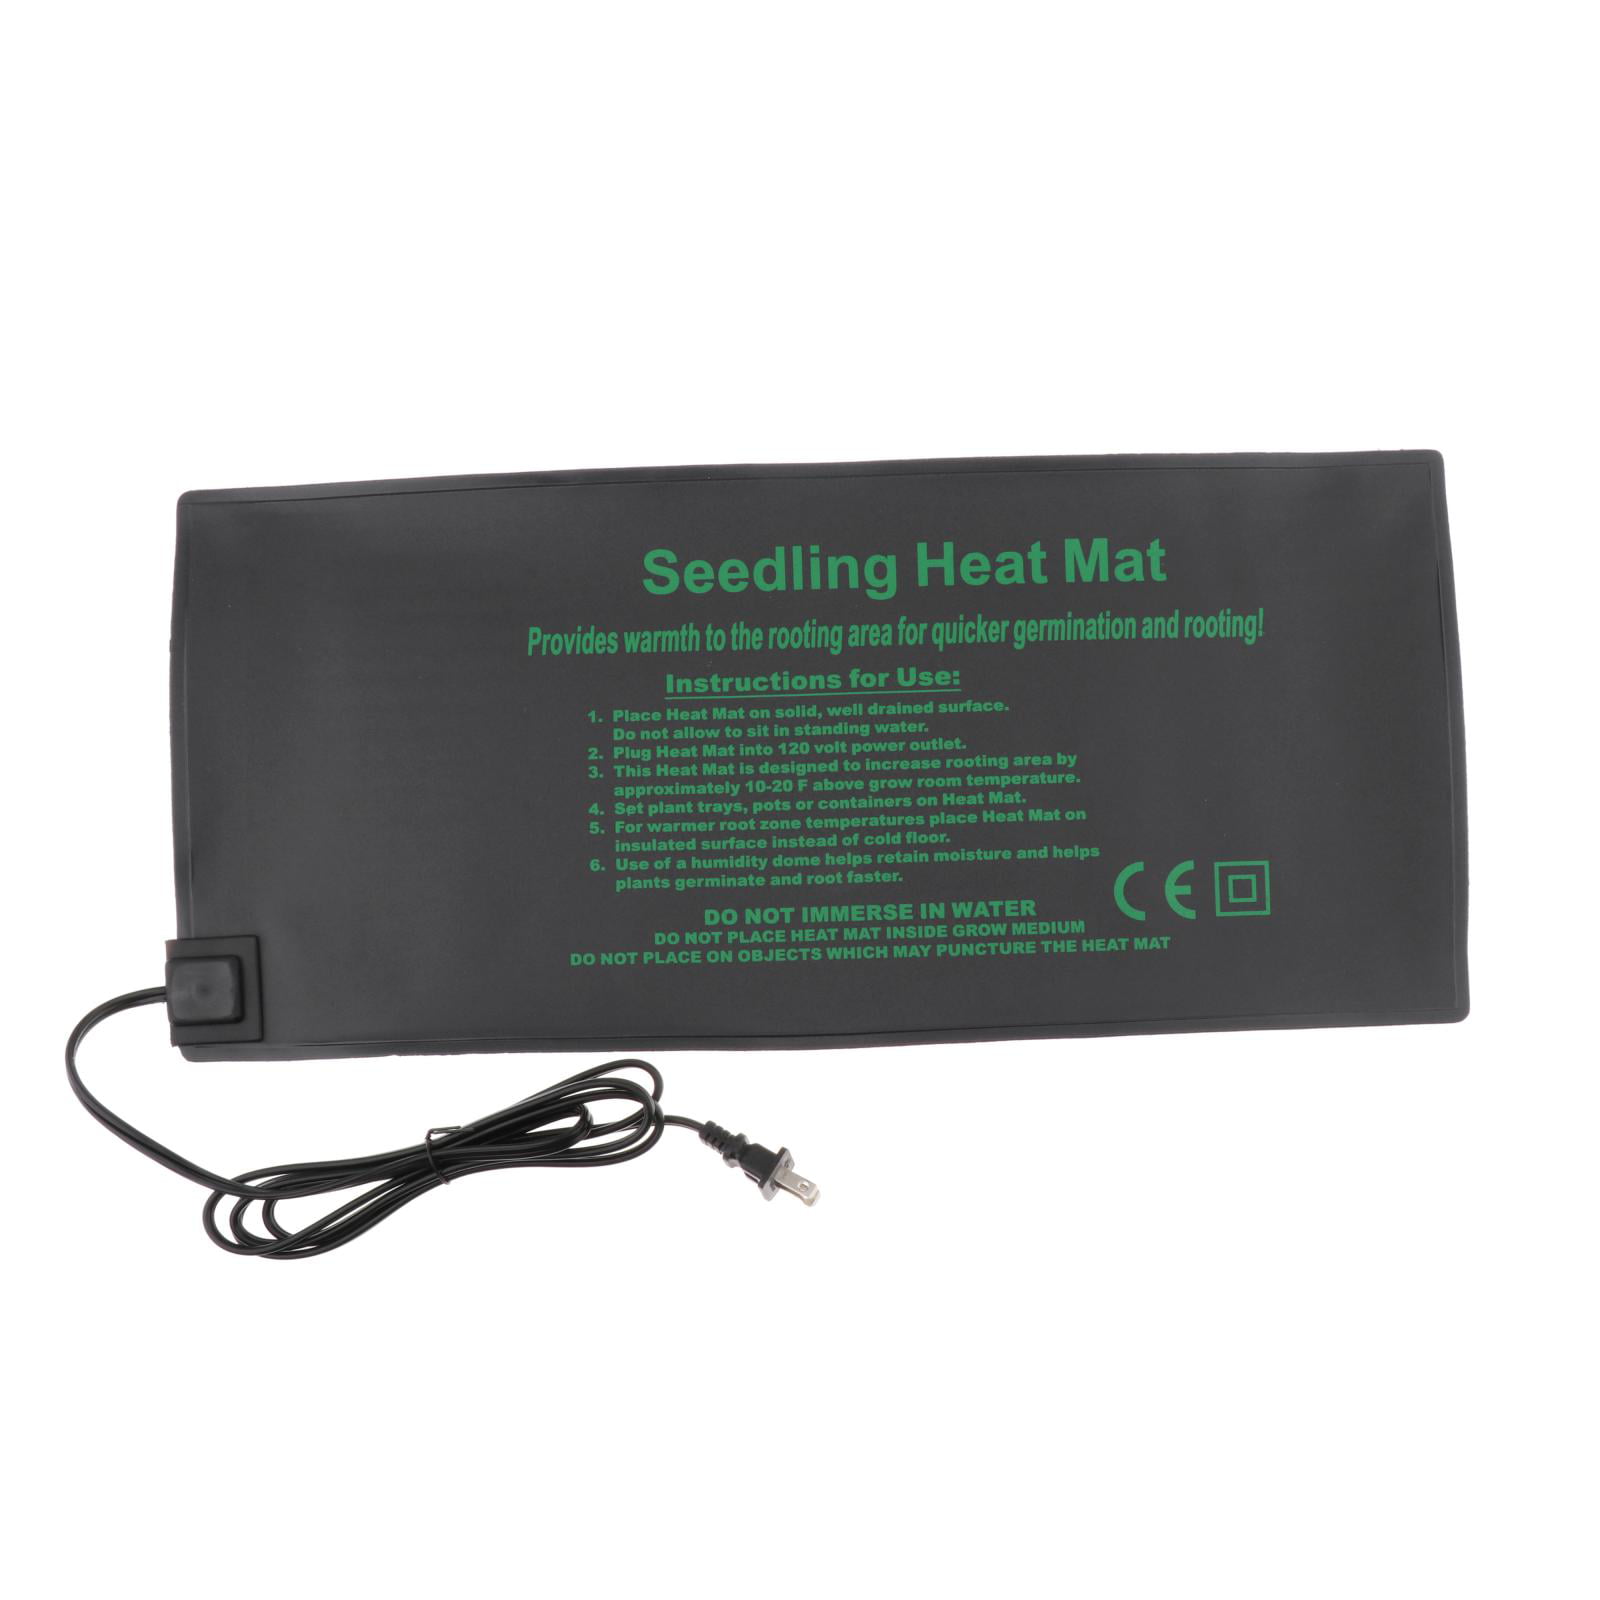 New Seedling Heat Mat 10"x20" Seed Starter Pad Germination Propagation Clone 